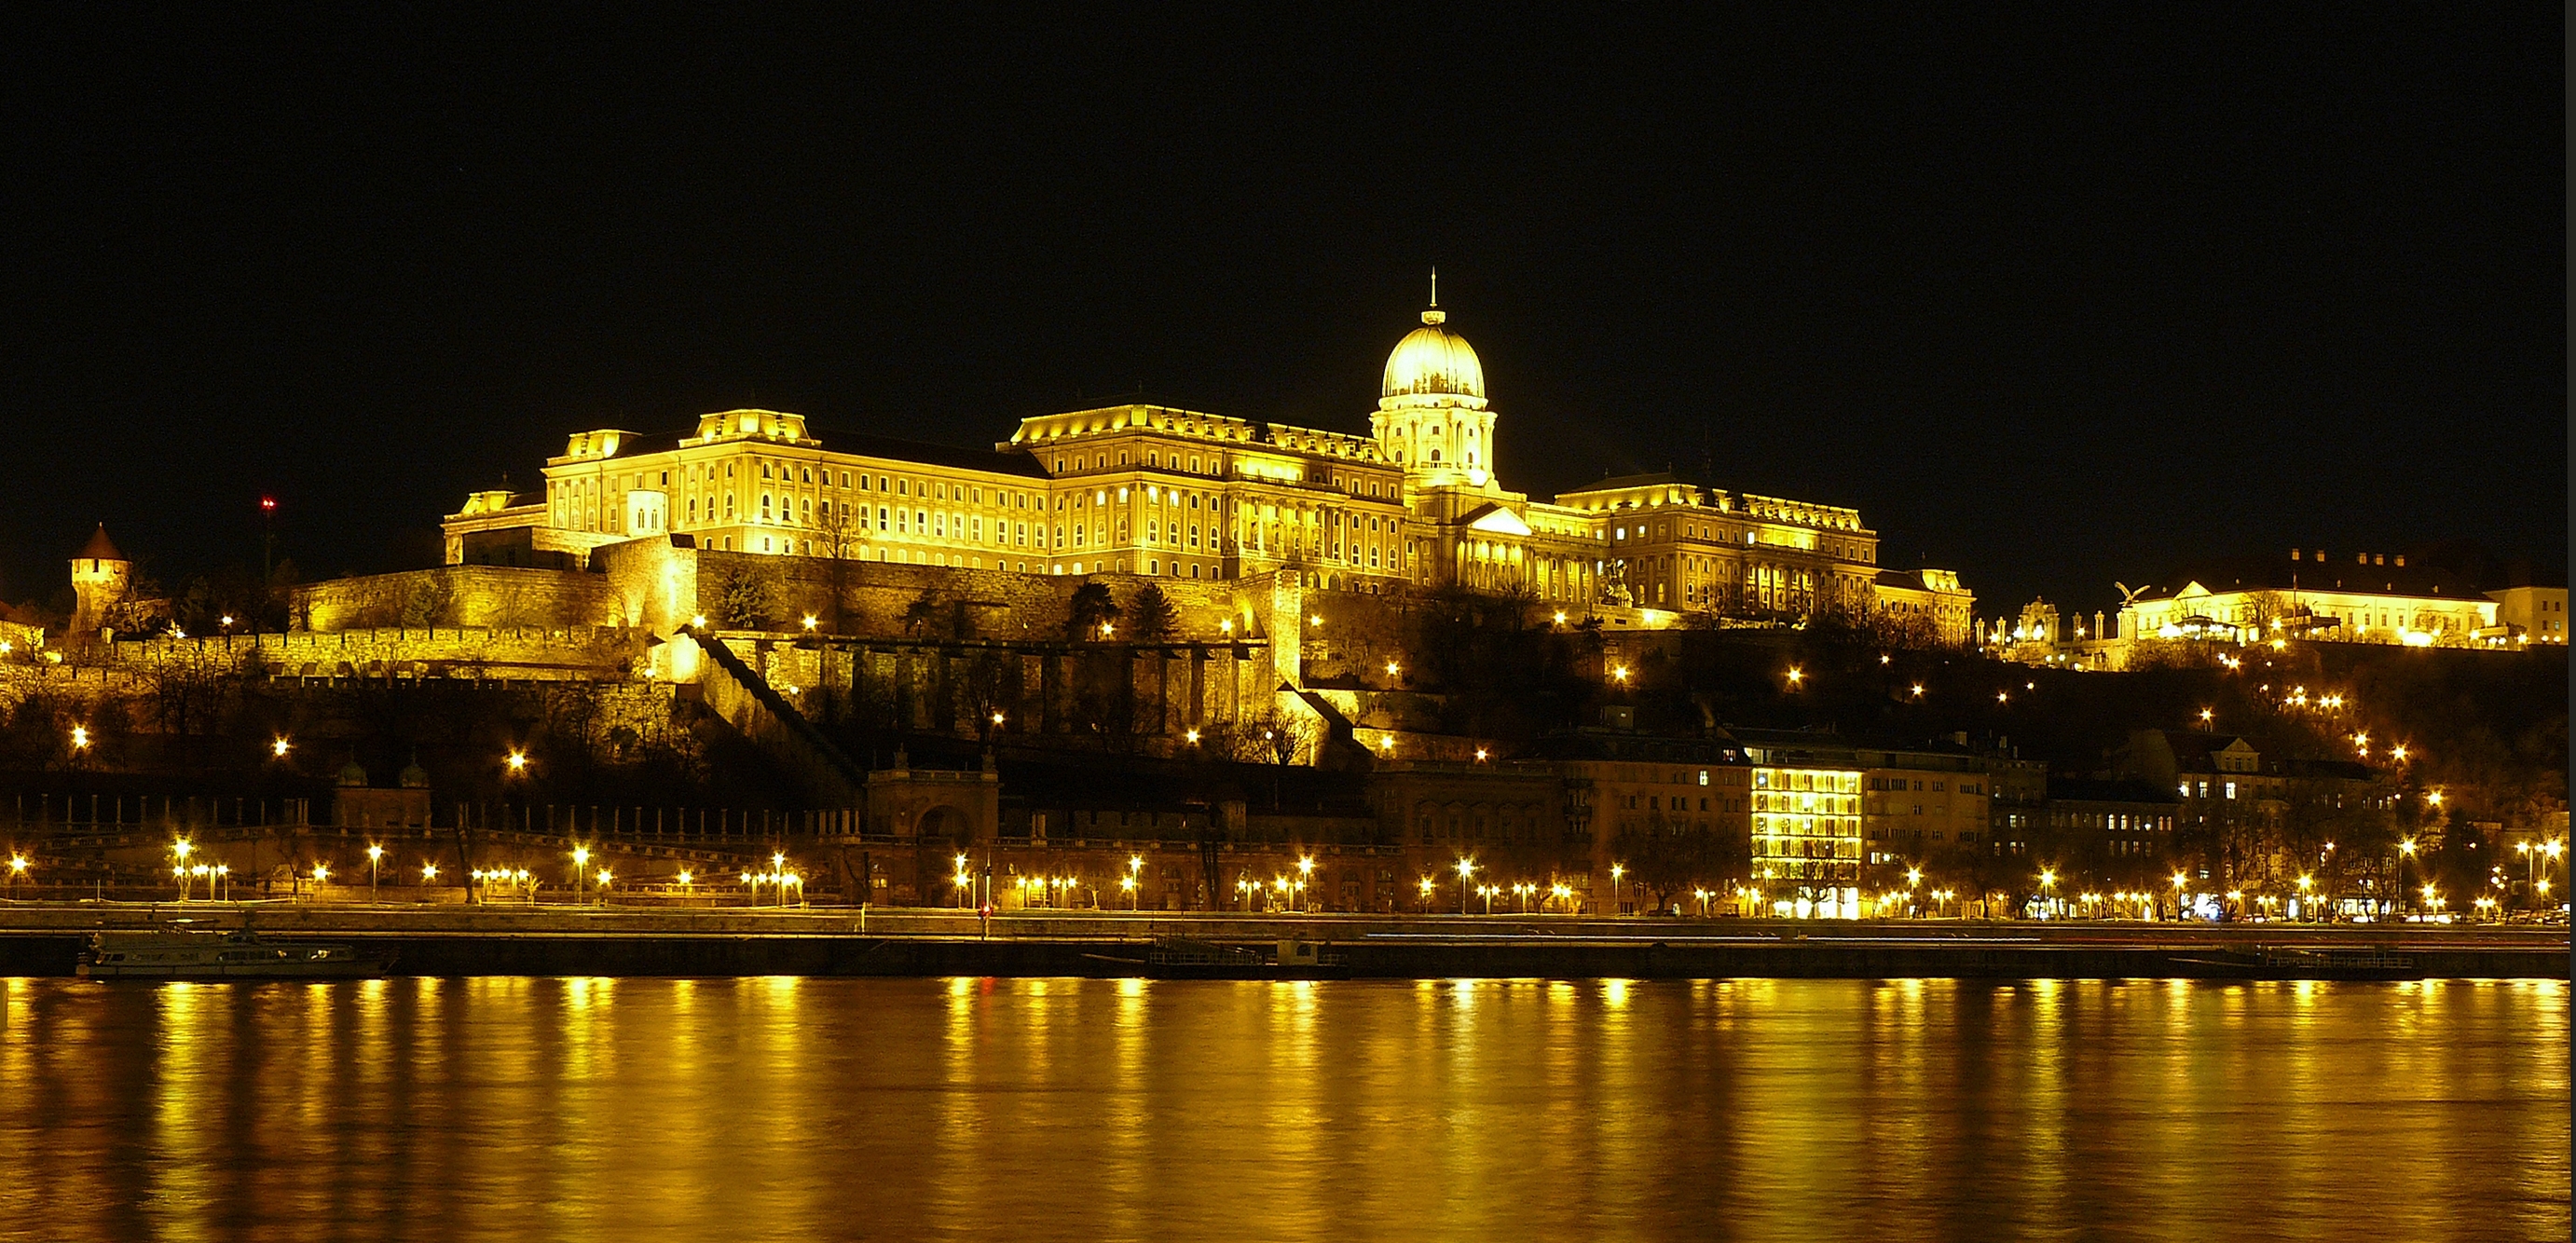 Buda castle photo